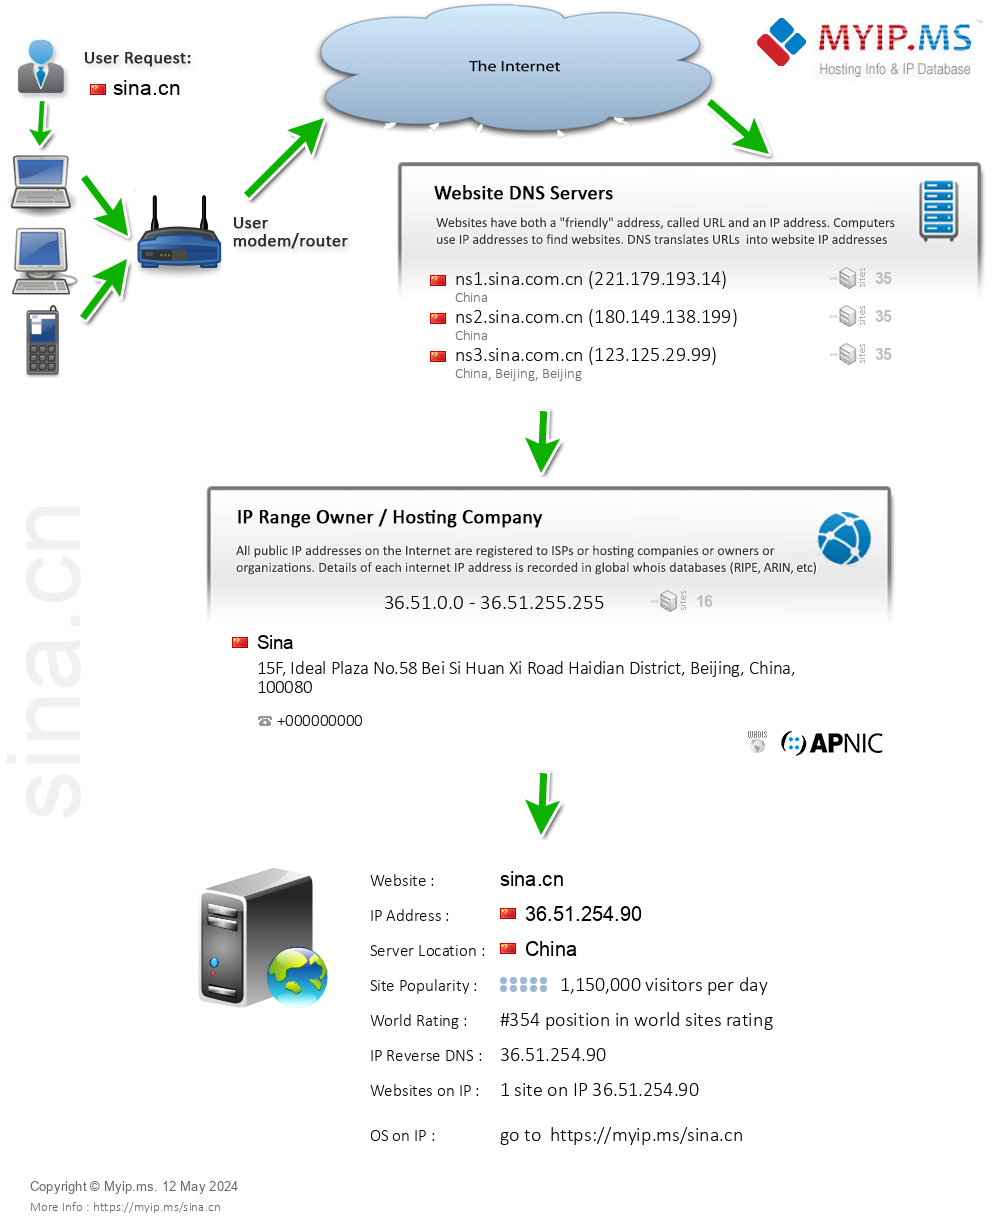 Sina.cn - Website Hosting Visual IP Diagram